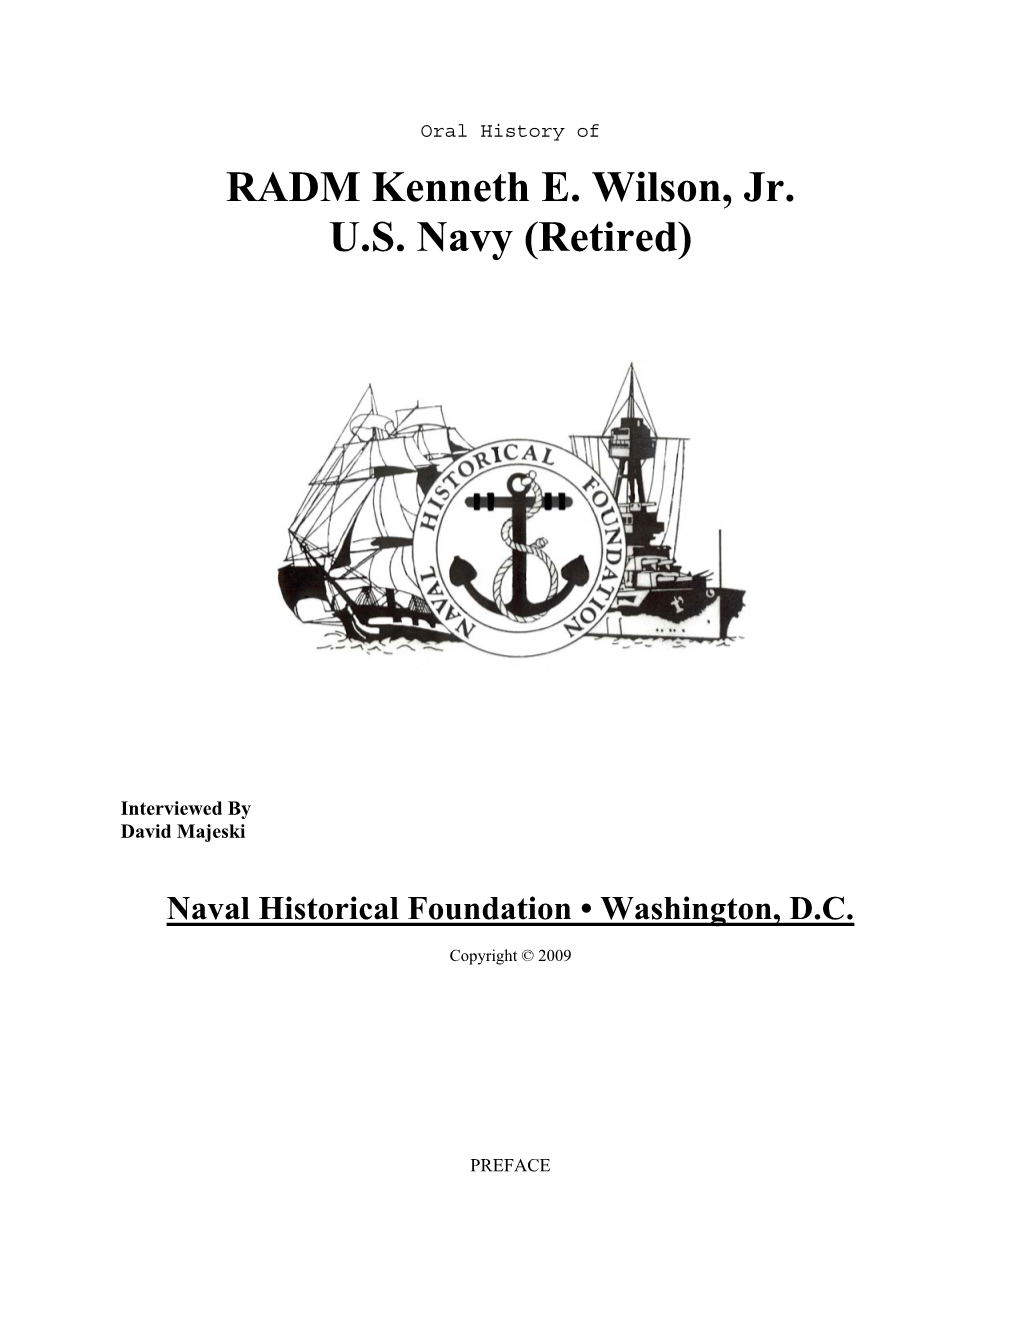 RADM Kenneth E. Wilson, Jr. US Navy